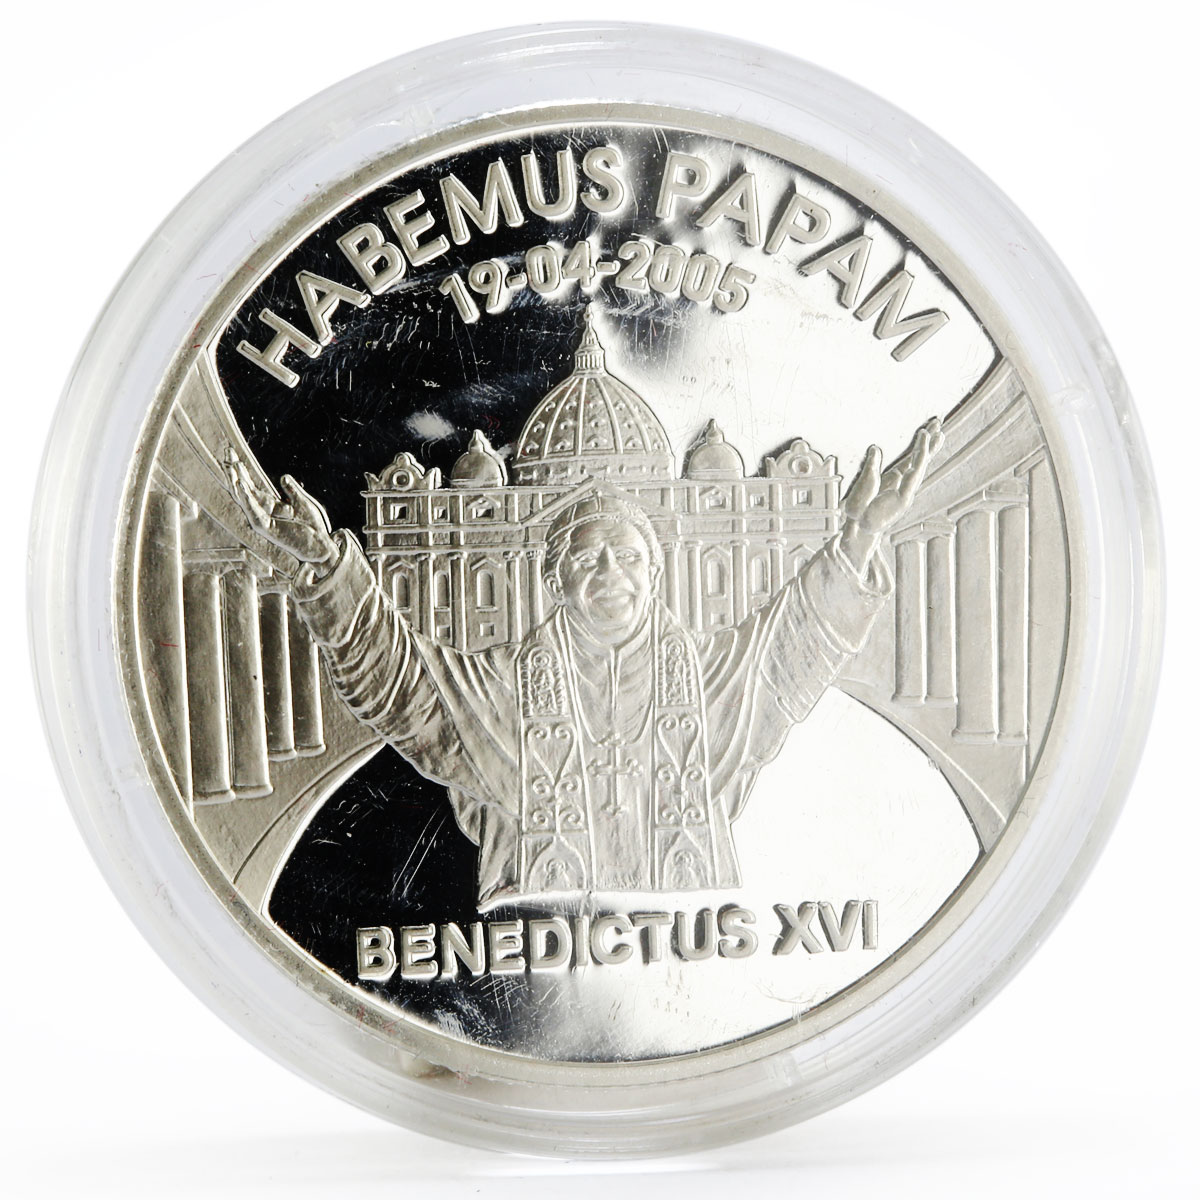 Liberia 10 dollars Benedict XVI Habemus Papam proof silver coin 2005